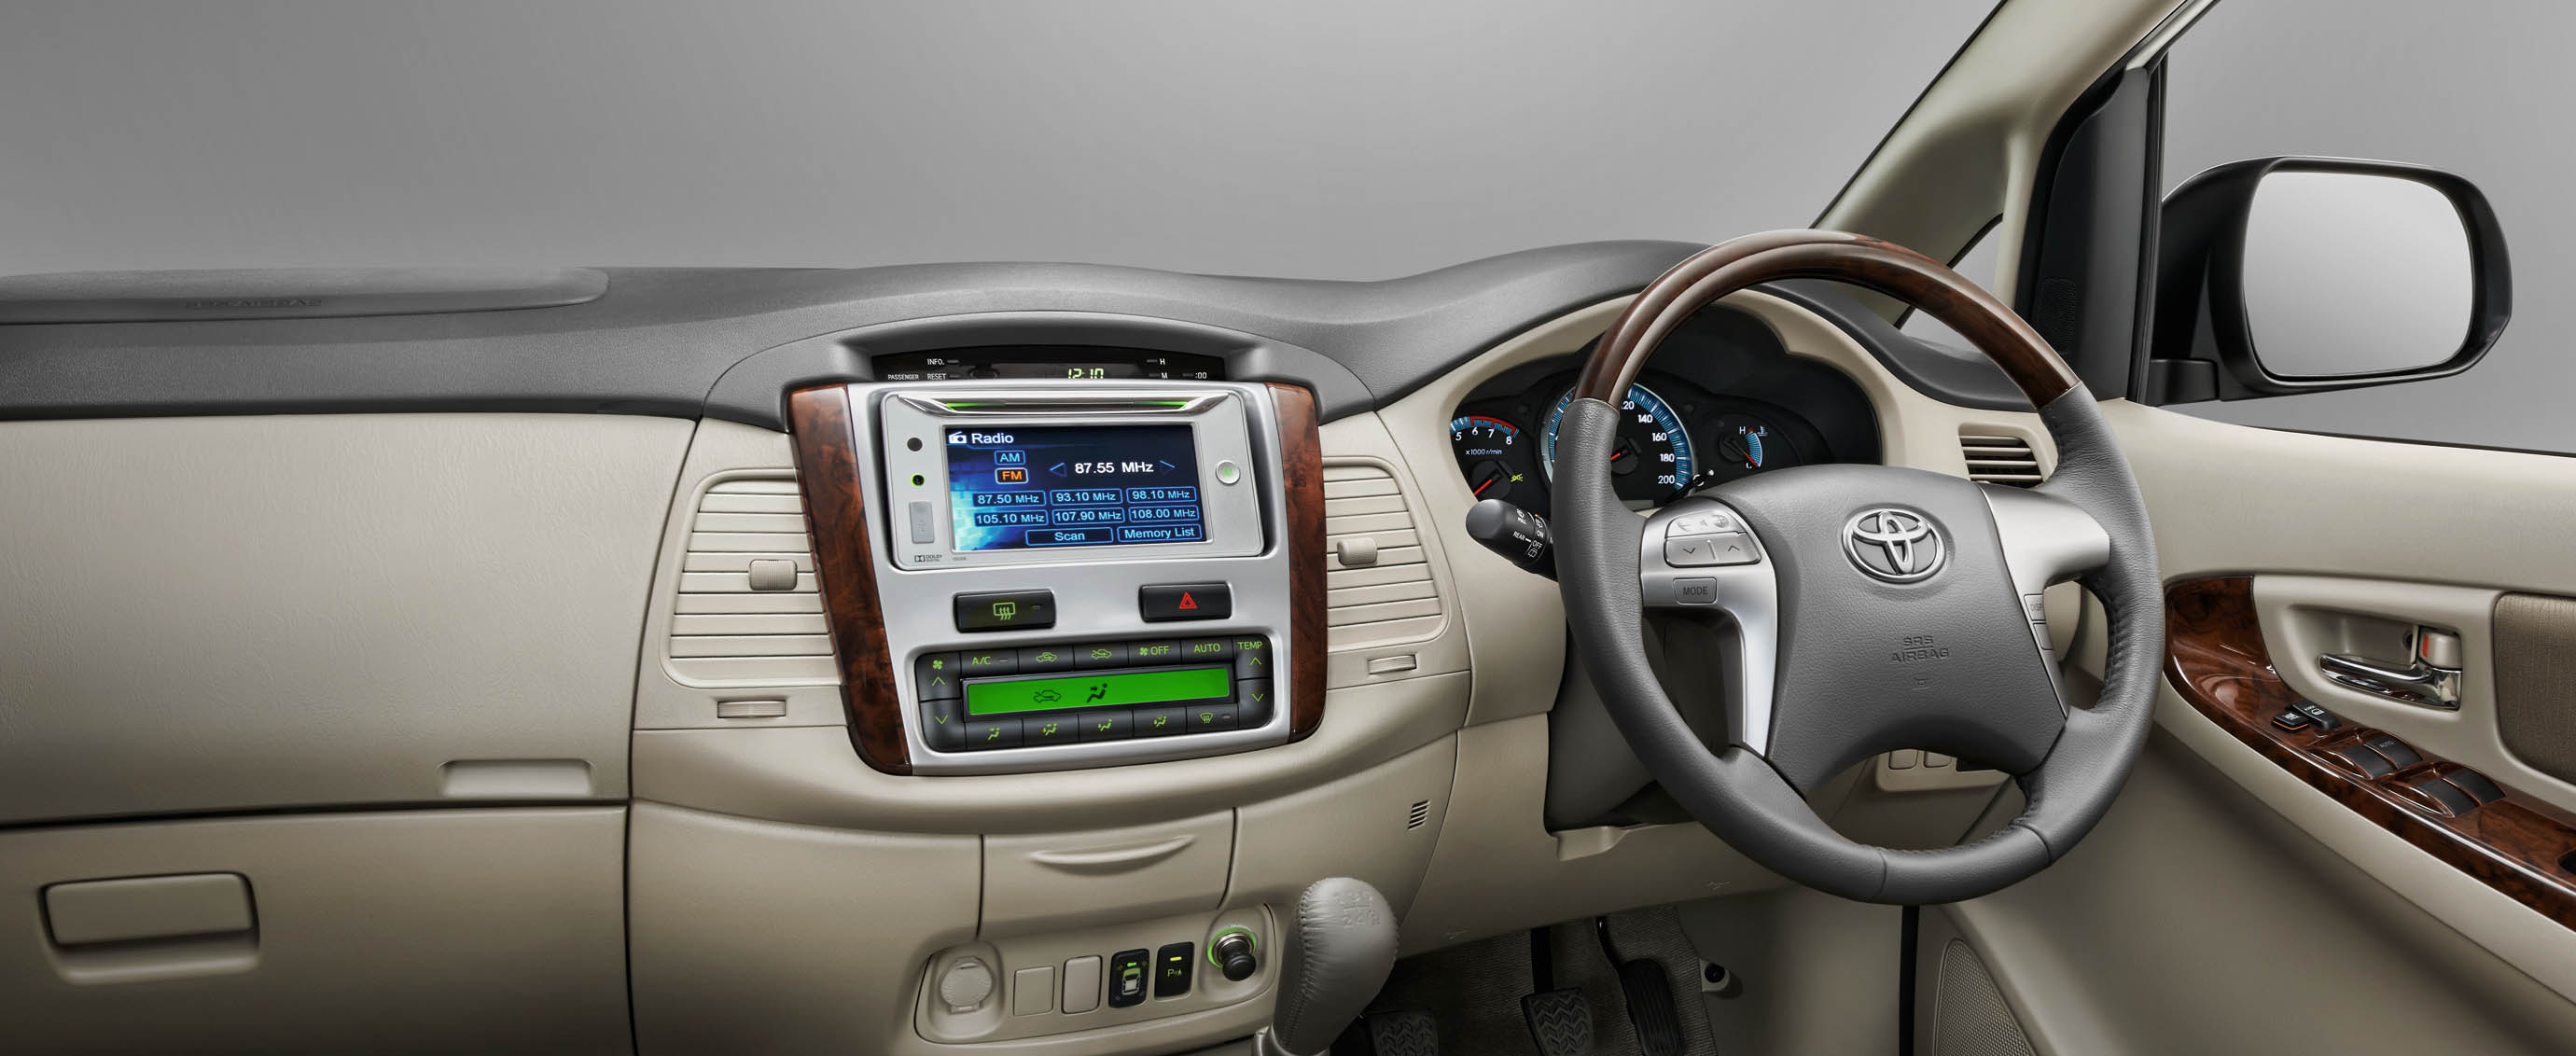 Mobil Baru, Toyota Kijang Innova 2013 dashboard tipe V: Nih Gambar High Resolution Foto Kijang Innova Facelift 2013